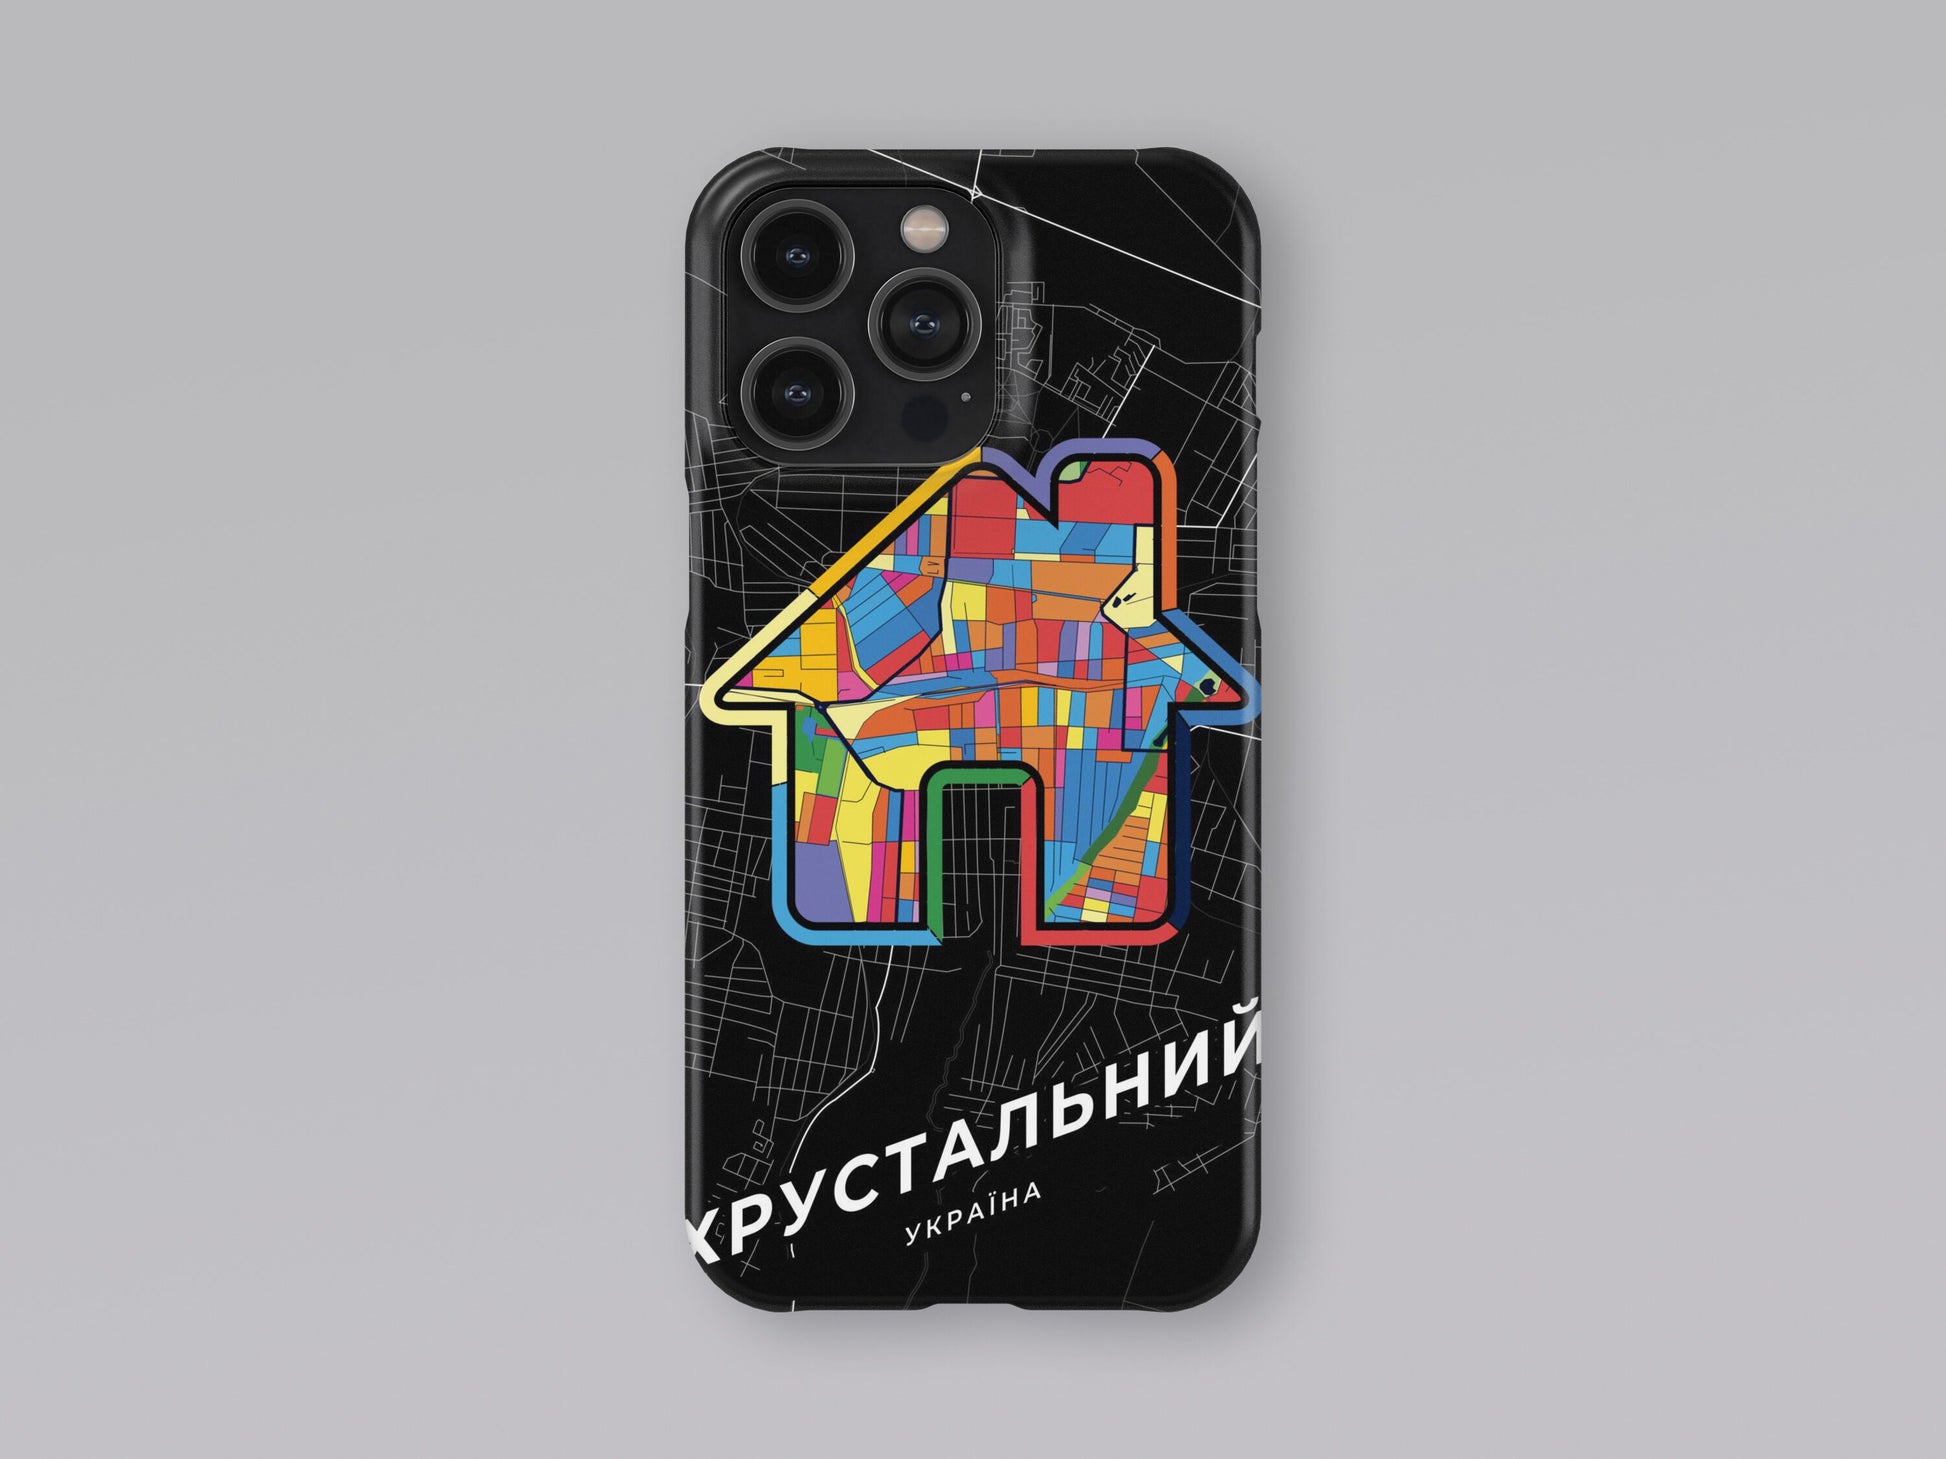 Khrustalnyi Ukraine slim phone case with colorful icon. Birthday, wedding or housewarming gift. Couple match cases. 3